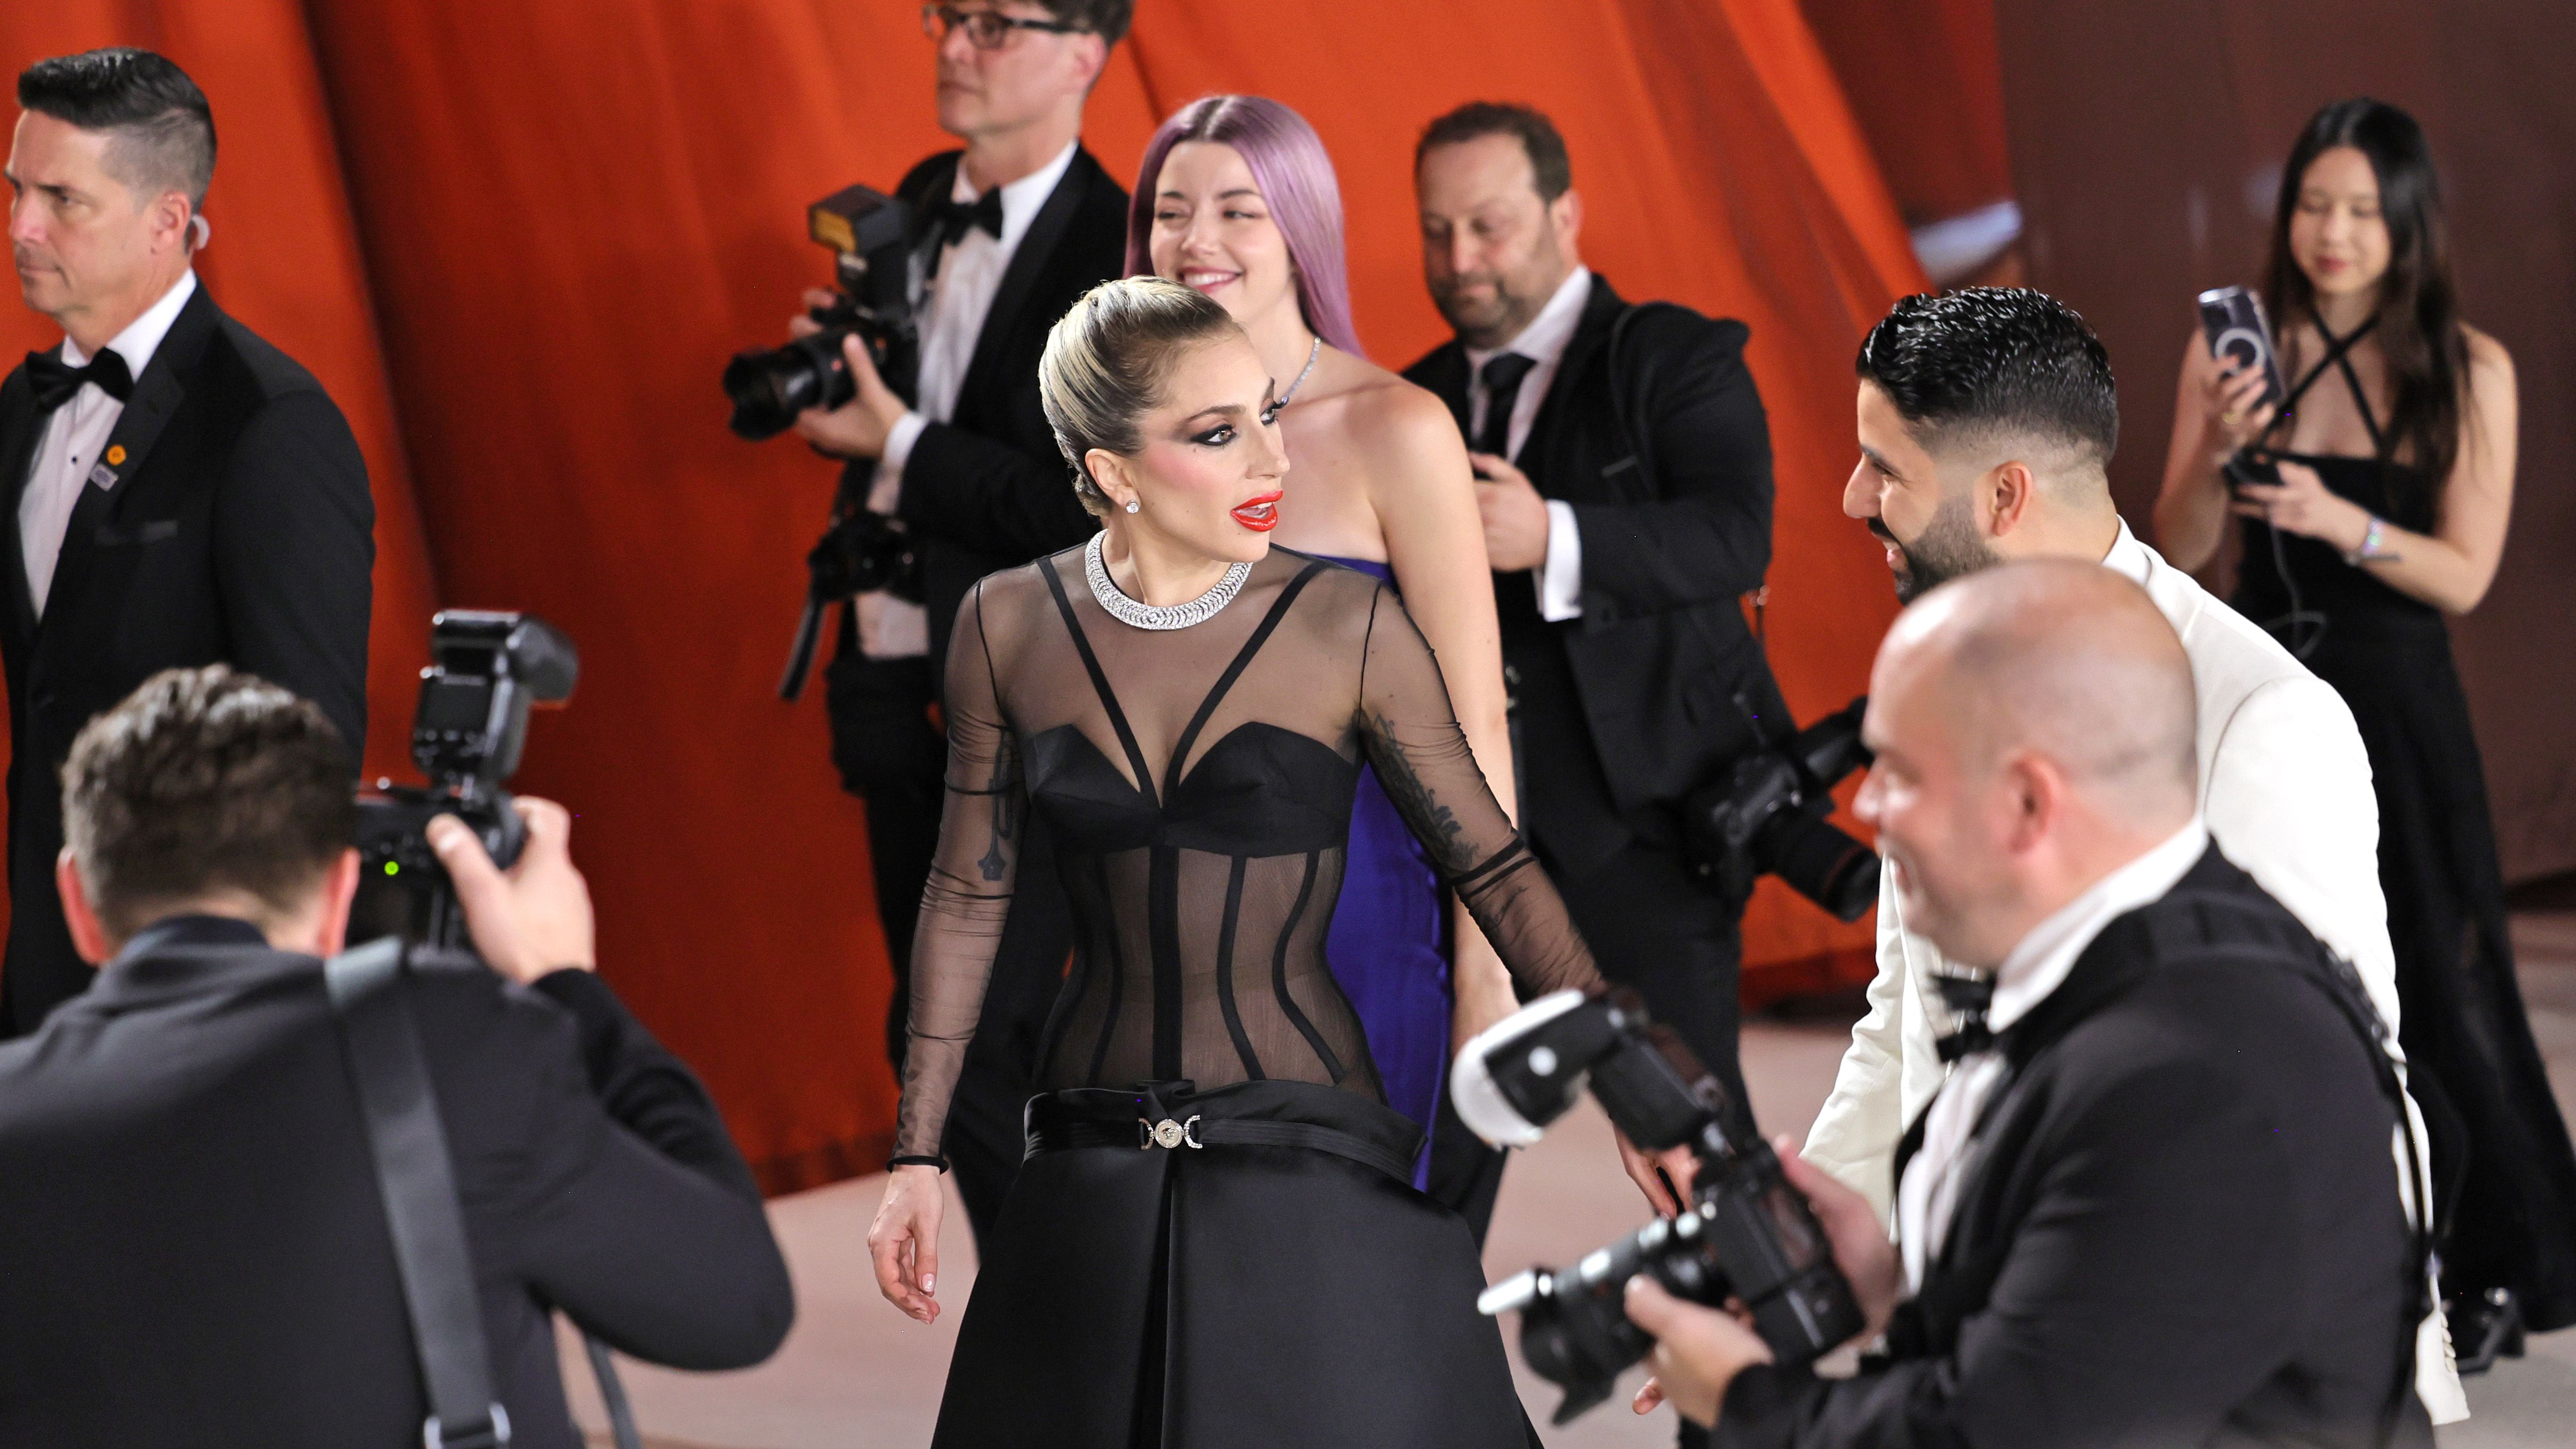 Watch Lady Gaga Help Fallen Photographer on Oscars Red Carpet